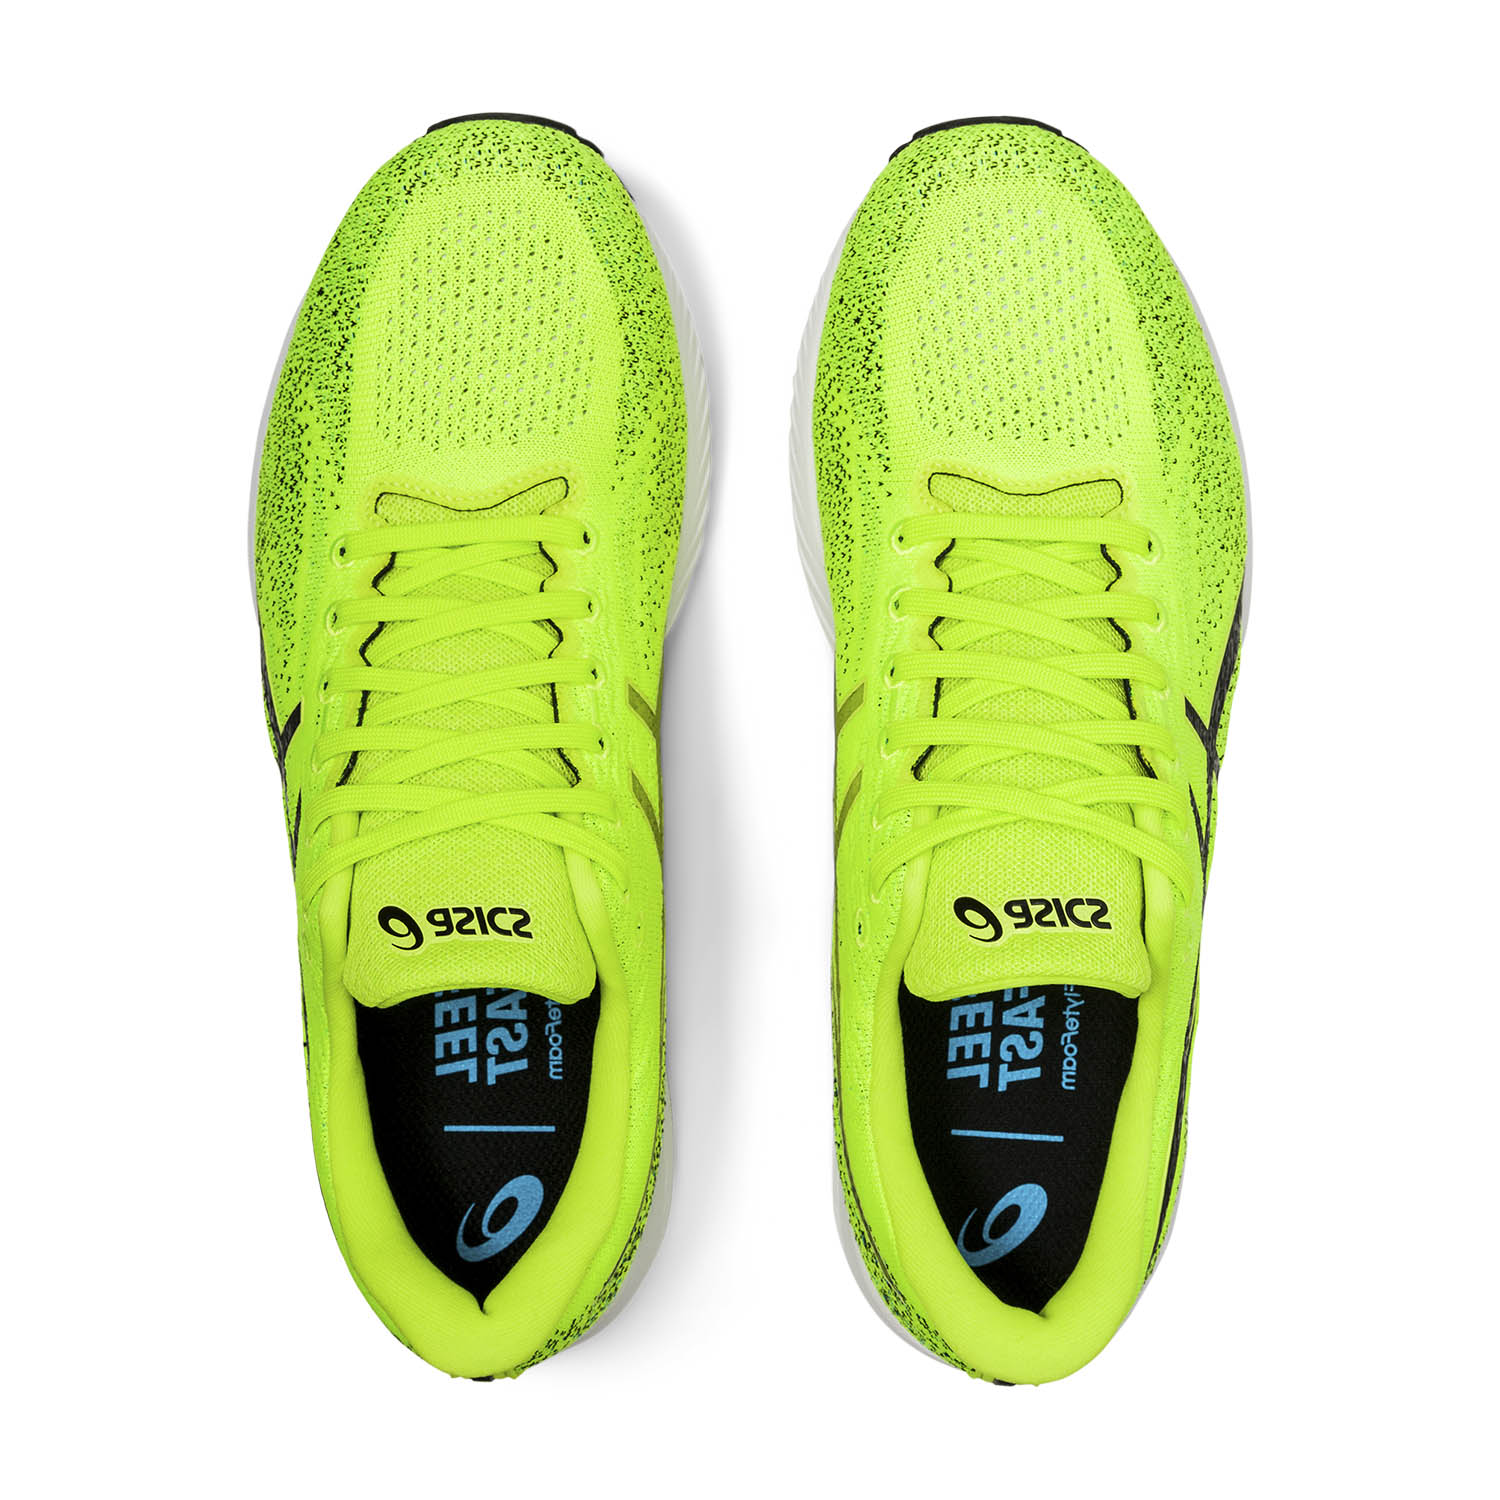 Asics Gel Ds Trainer 26 Men S Running Shoes Hazard Green